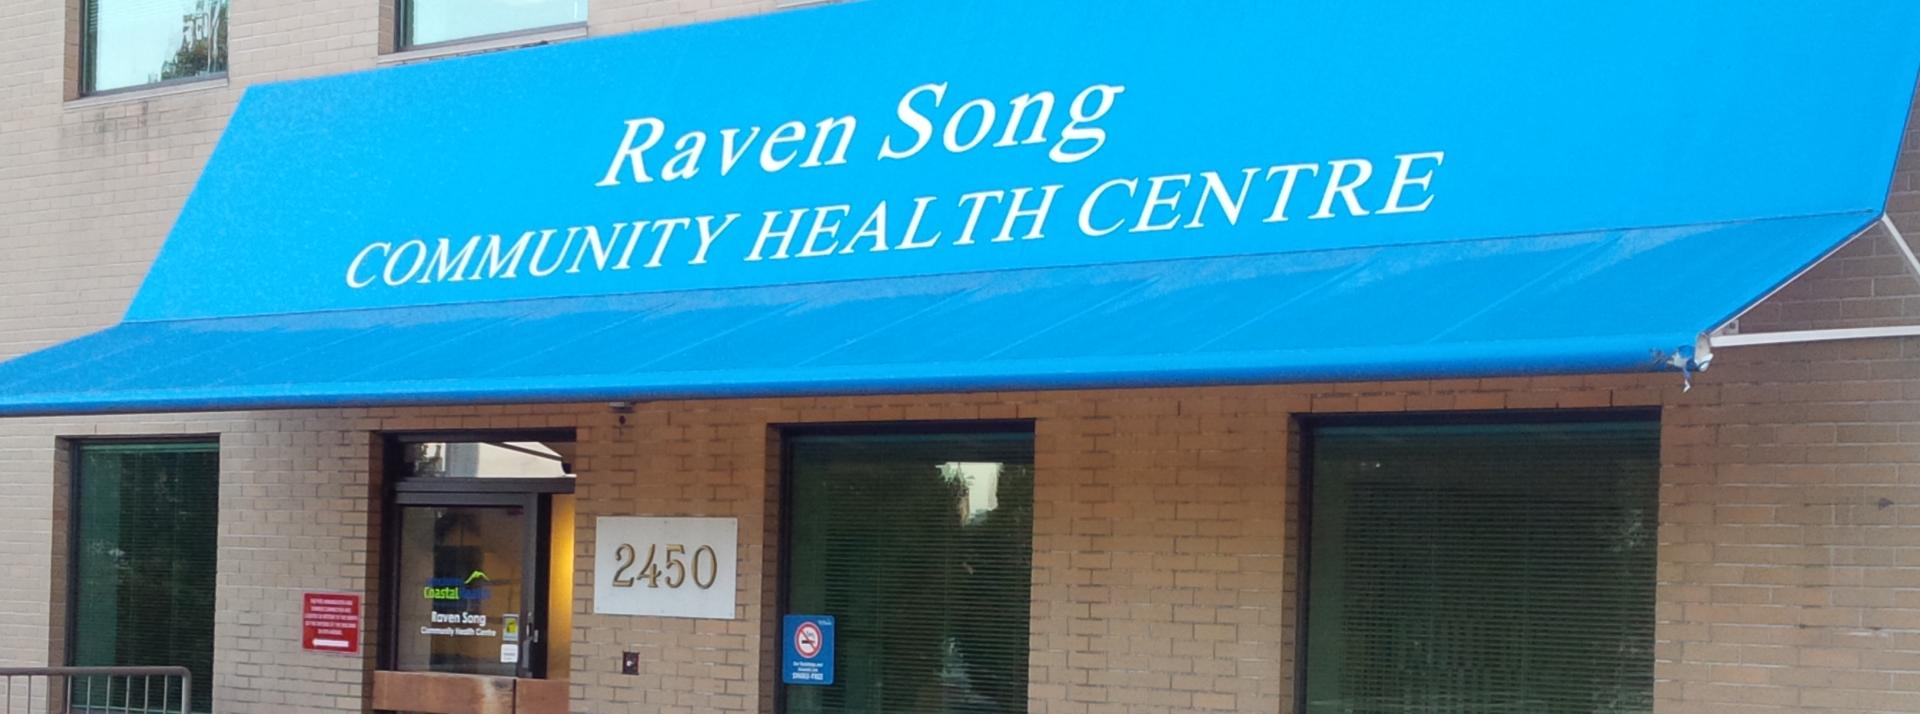 Raven Song Community Health Centre Entrance 